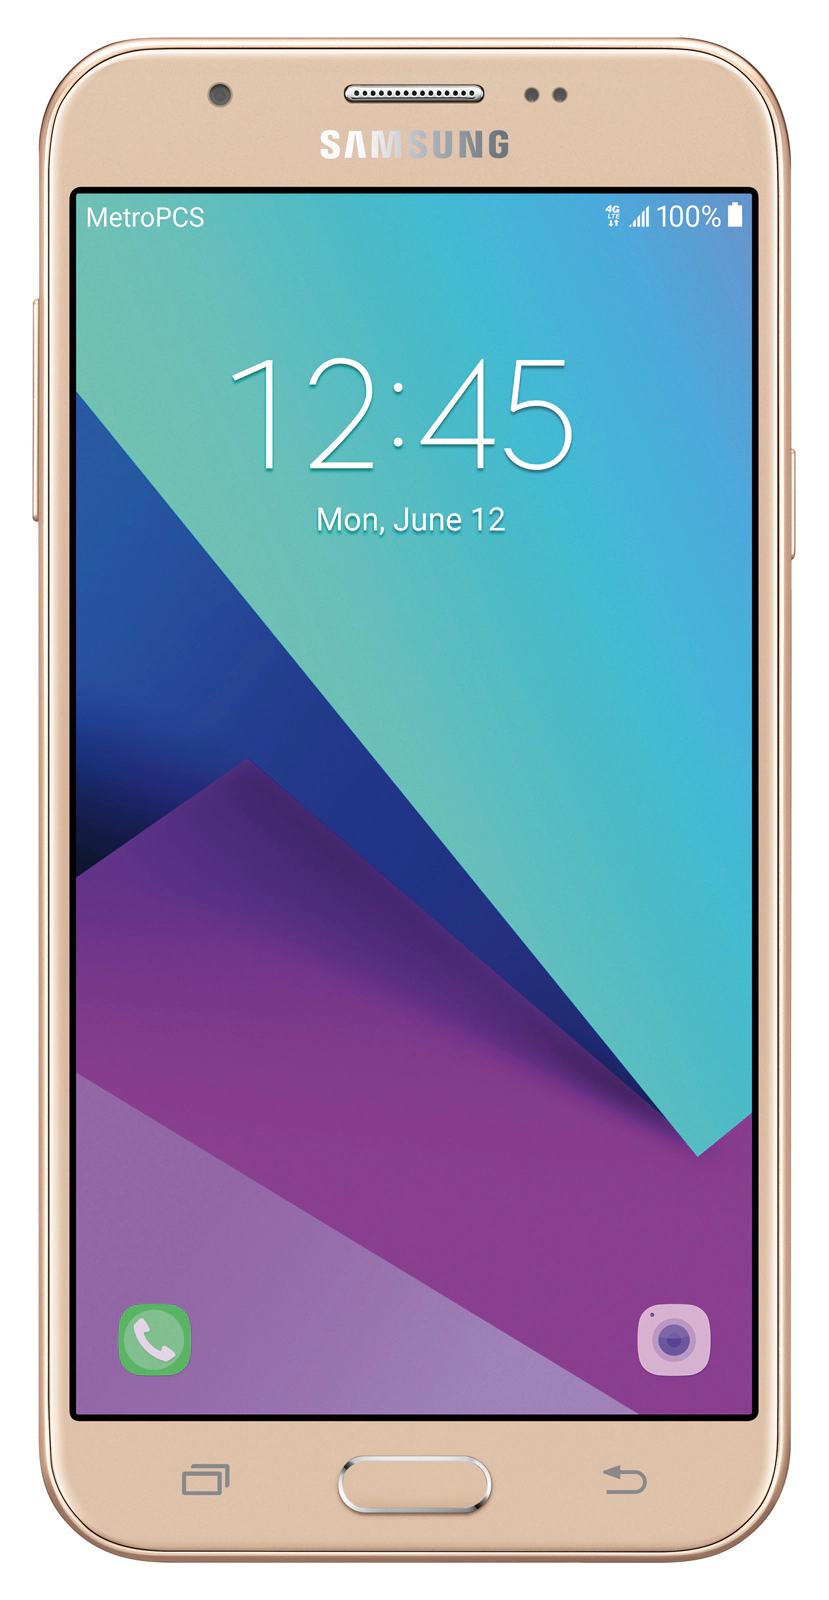 Samsung SM-J727R4 Galaxy J7 16GB Smartphone U.S. Cellular